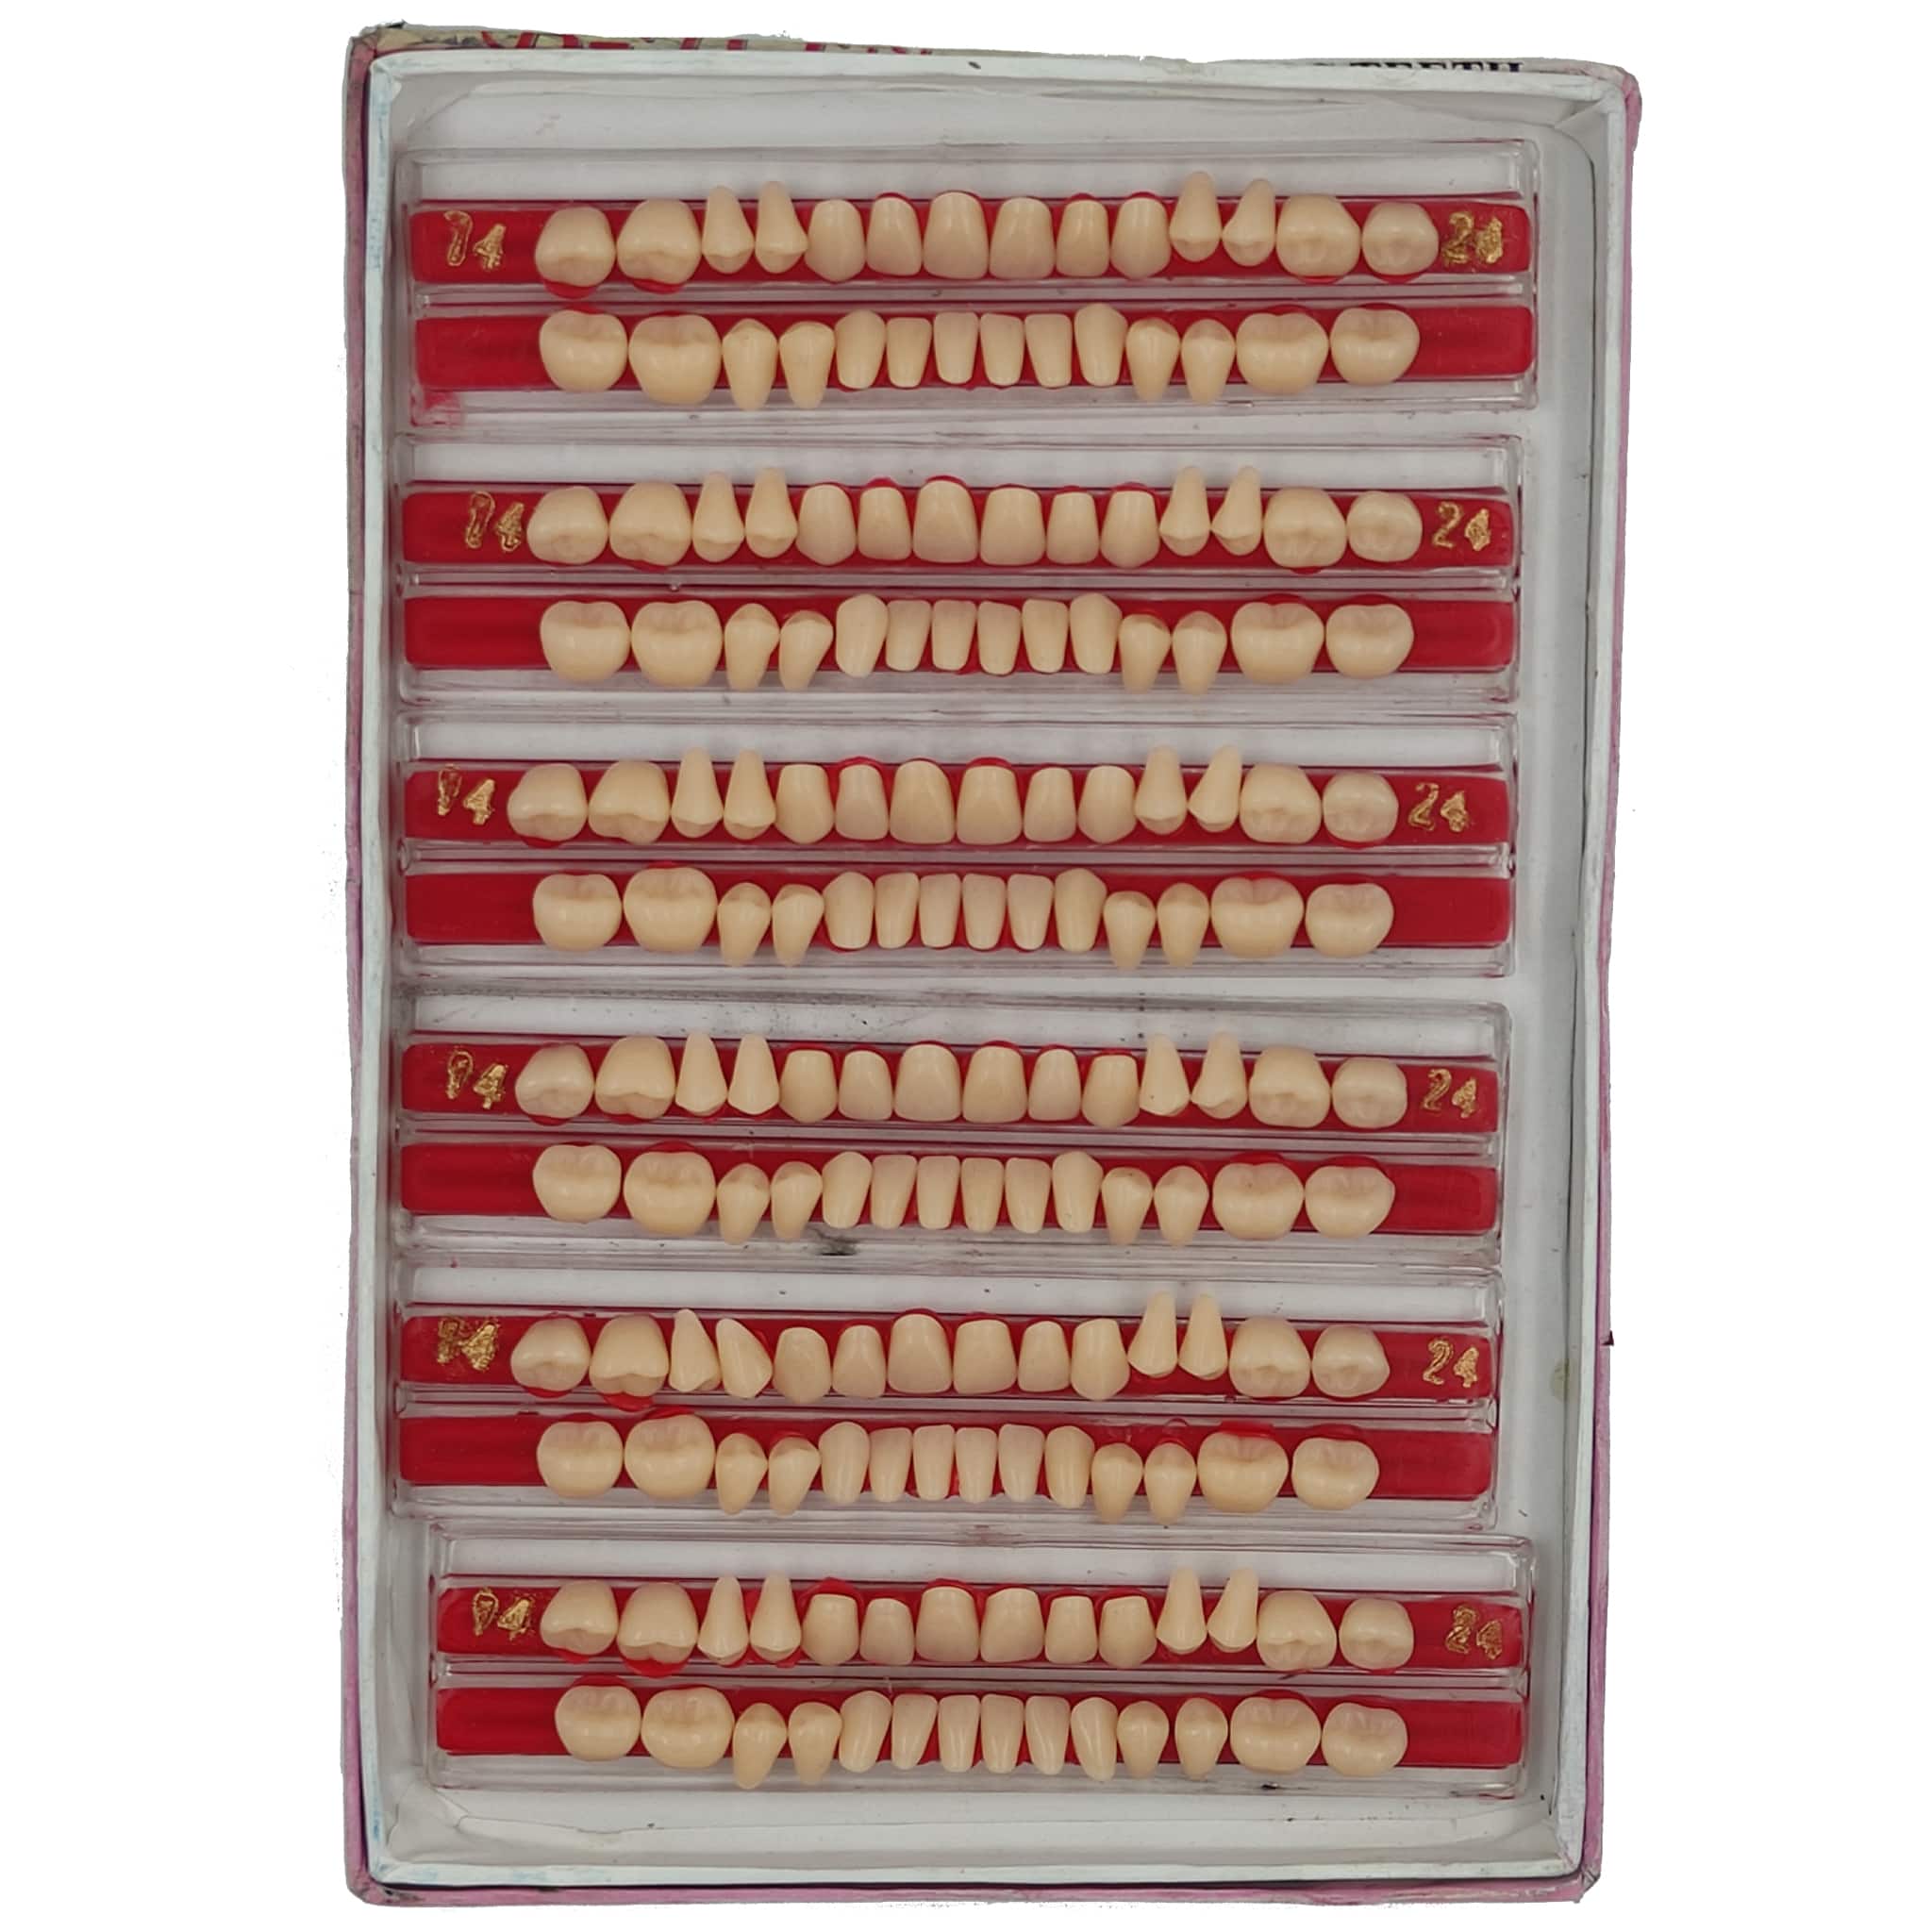 Vecodent Super Acrylic Teeth Set of 28 (Box of 6) Shade 22 (Whitish)